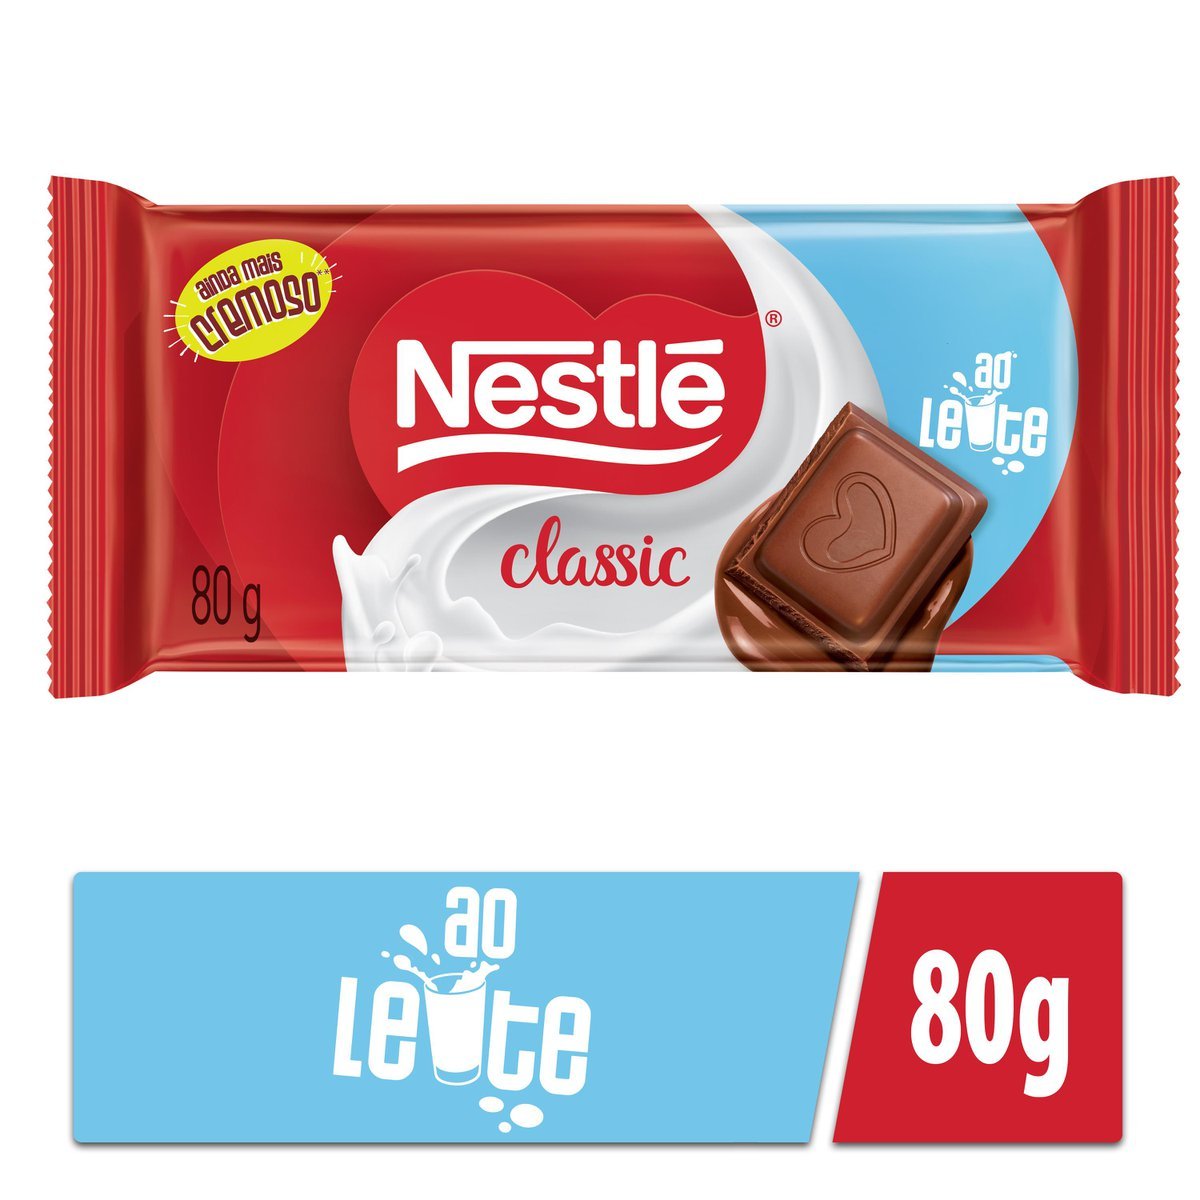 Chocolate Branco Lacta Laka Oreo 165g - Paulistão Atacadista